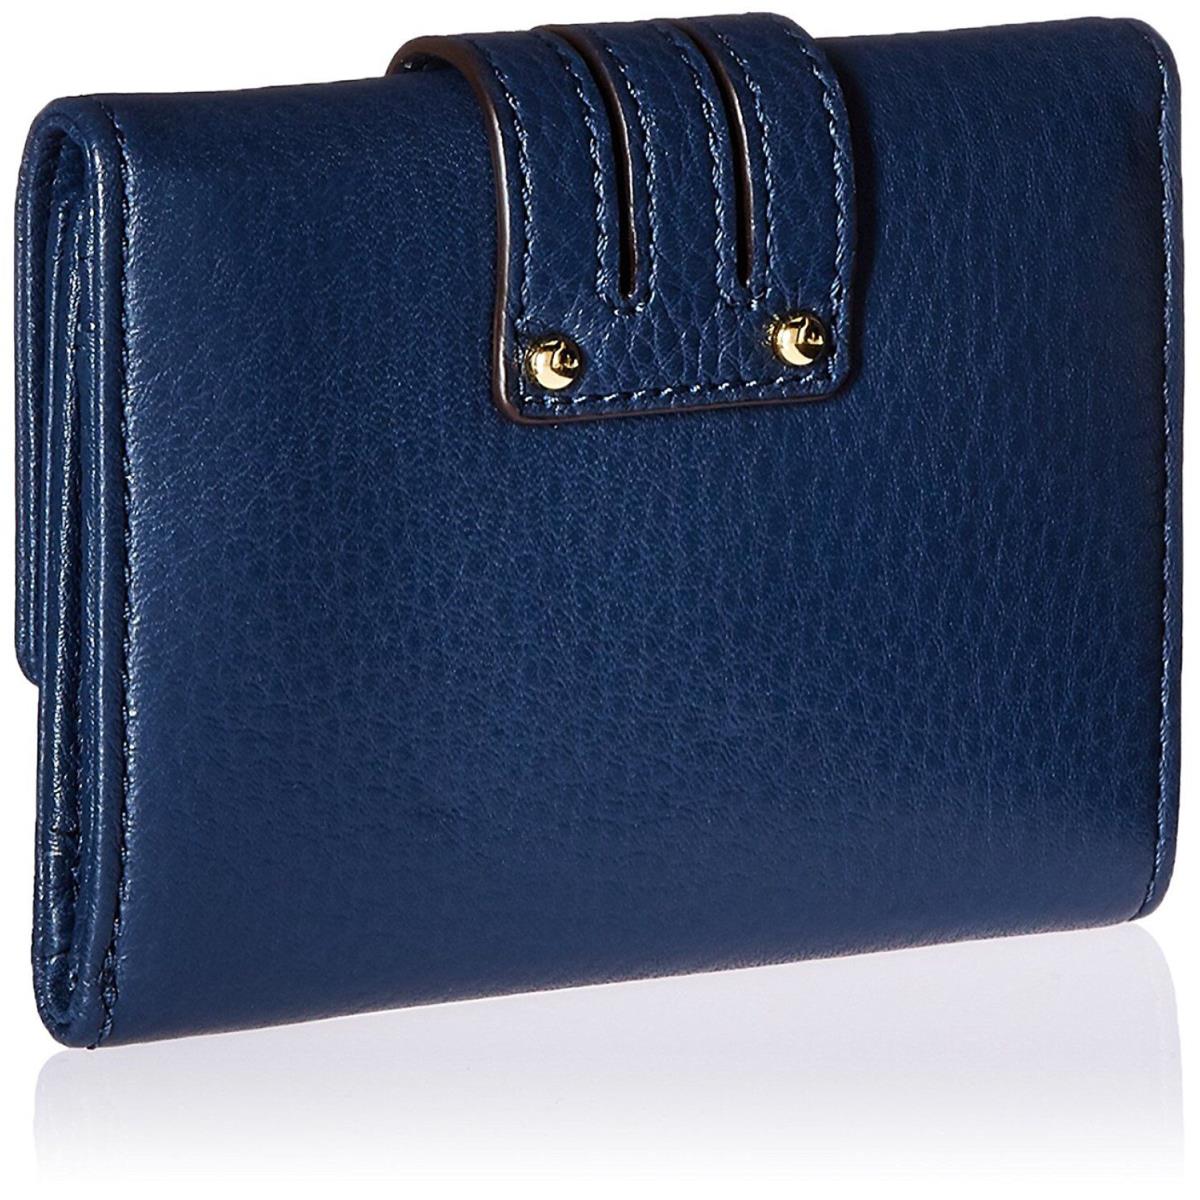 Michael Kors Gansevoort Medium Trifold Navy Blue Leather Clutch Wallet